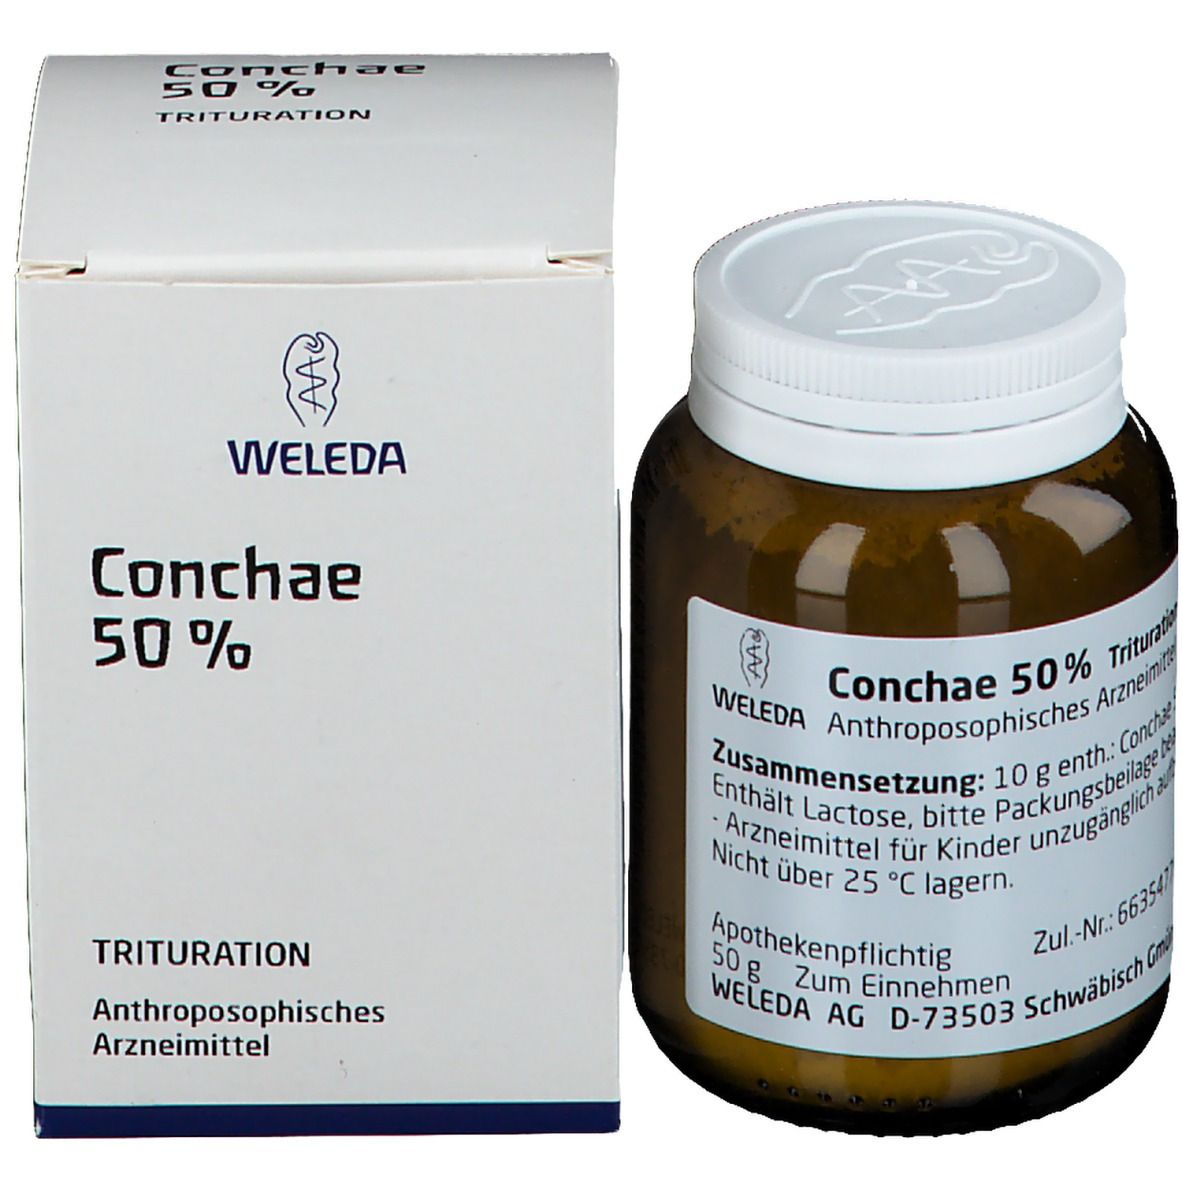 Conchae 50% Trituration